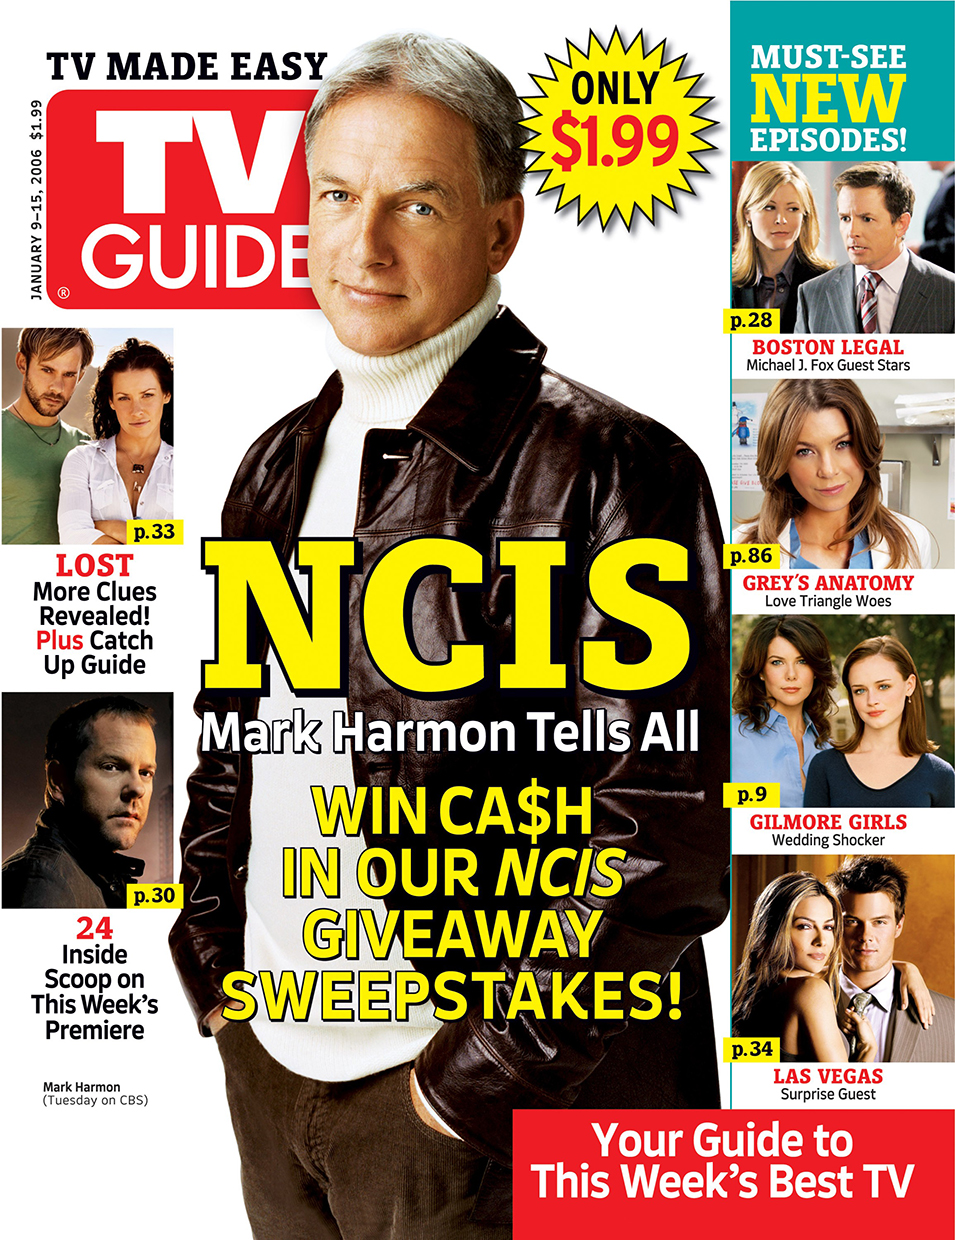 NCIS, Mark Harmon, TV GUIDE cover